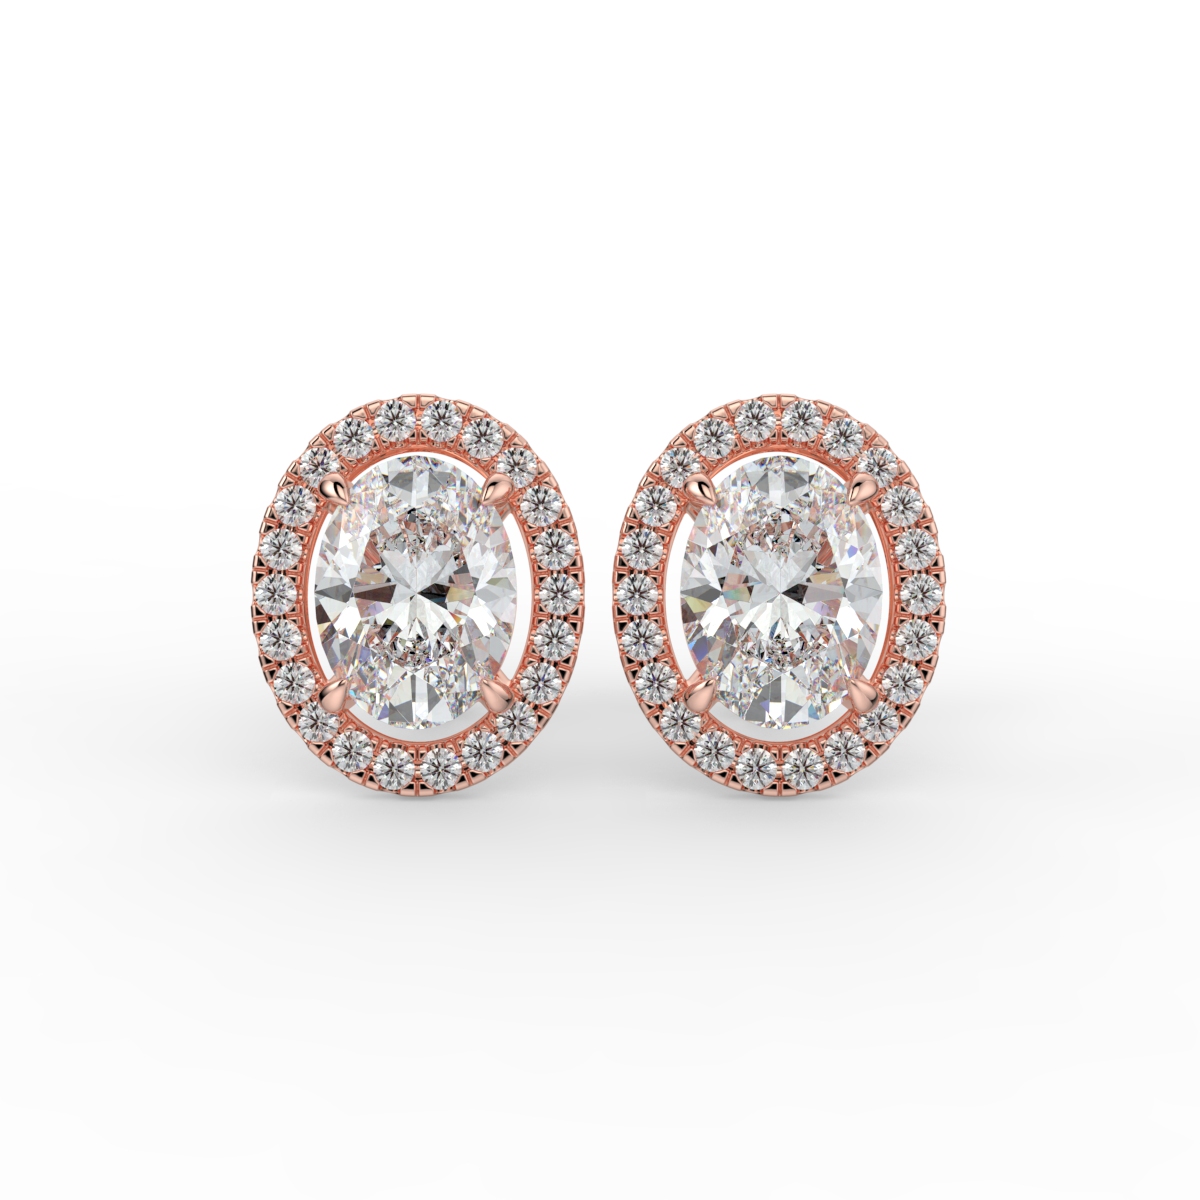 Oval Halo Diamond Earrings Rose Gold - RHEA